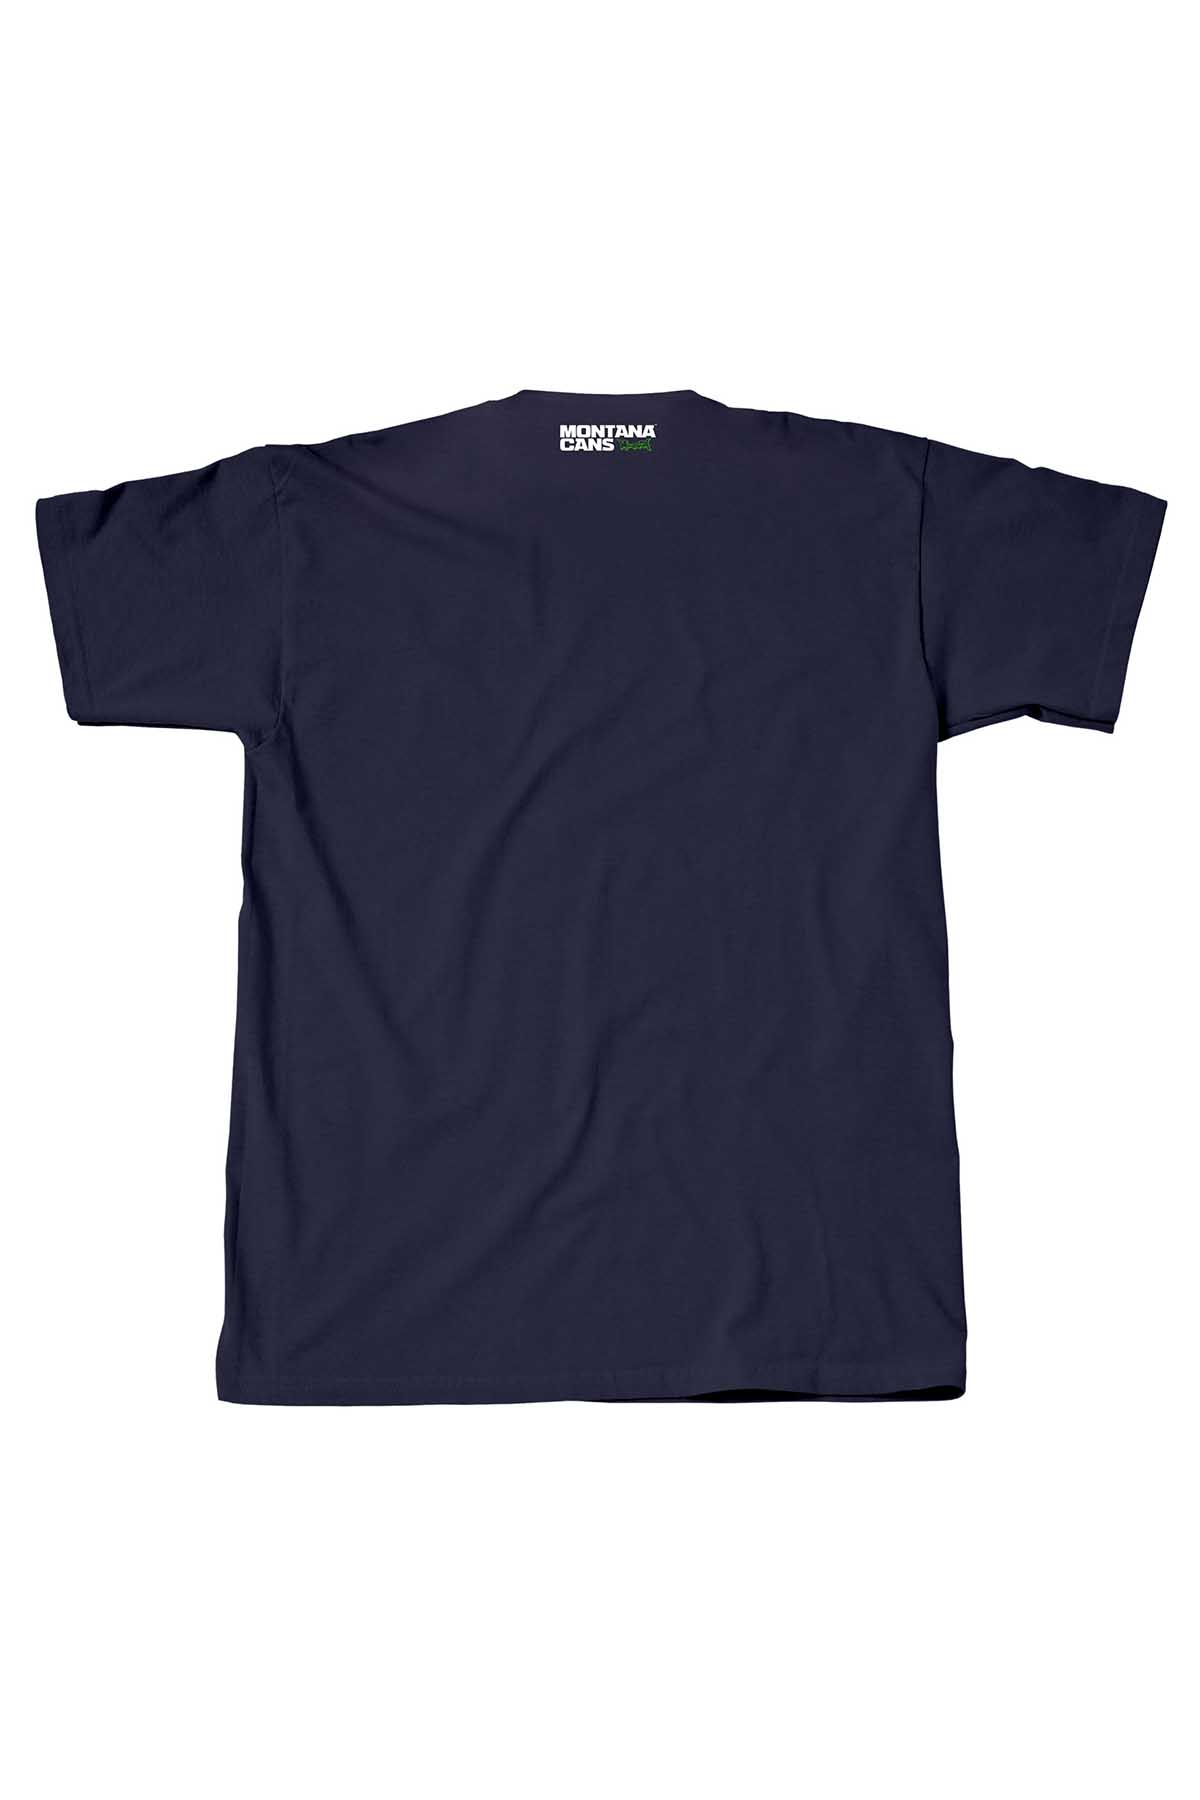 Montana TYPO+LOGO Navy T-Shirt